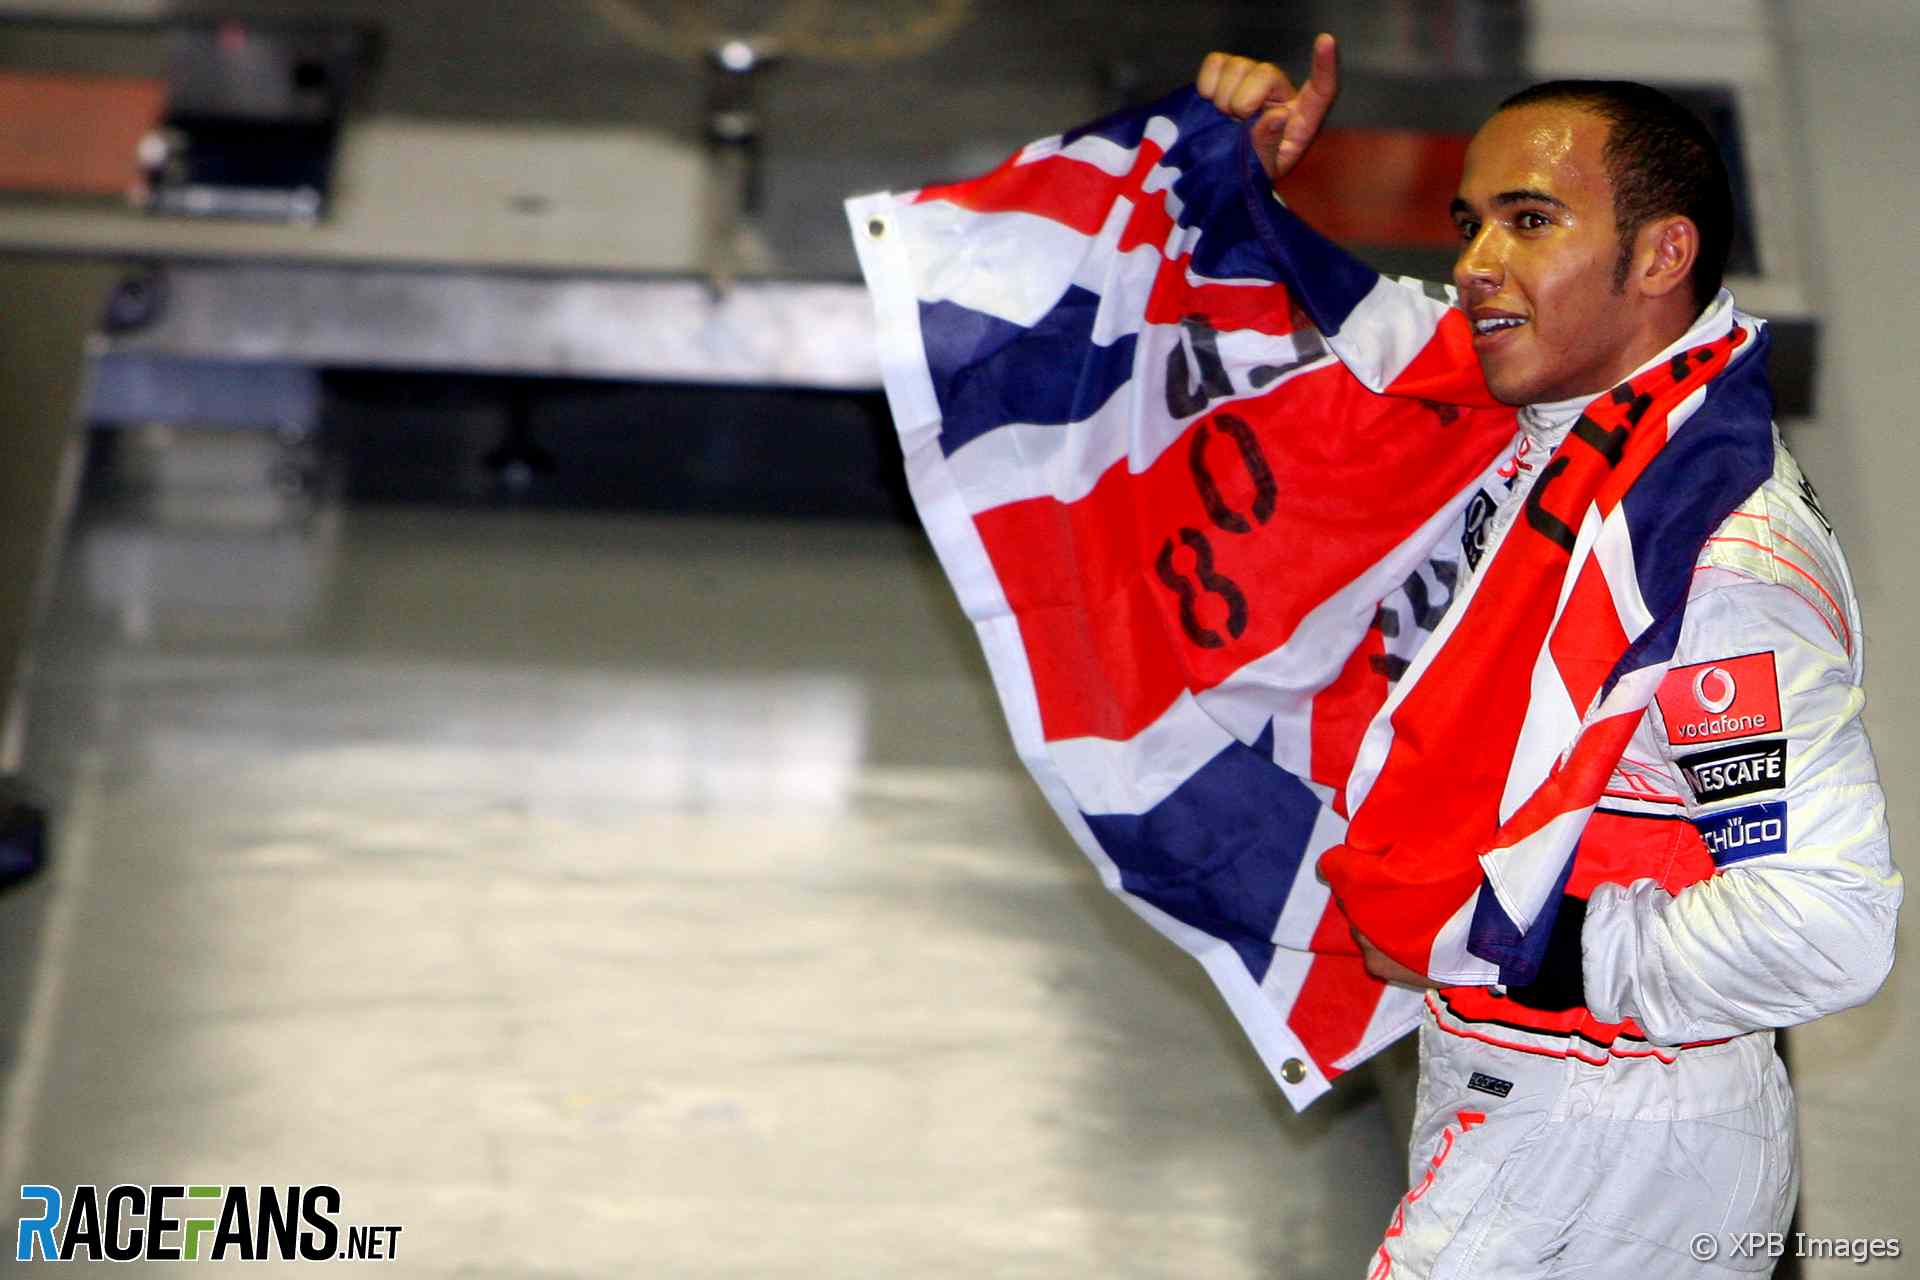 2008 World Champion, Lewis Hamilton